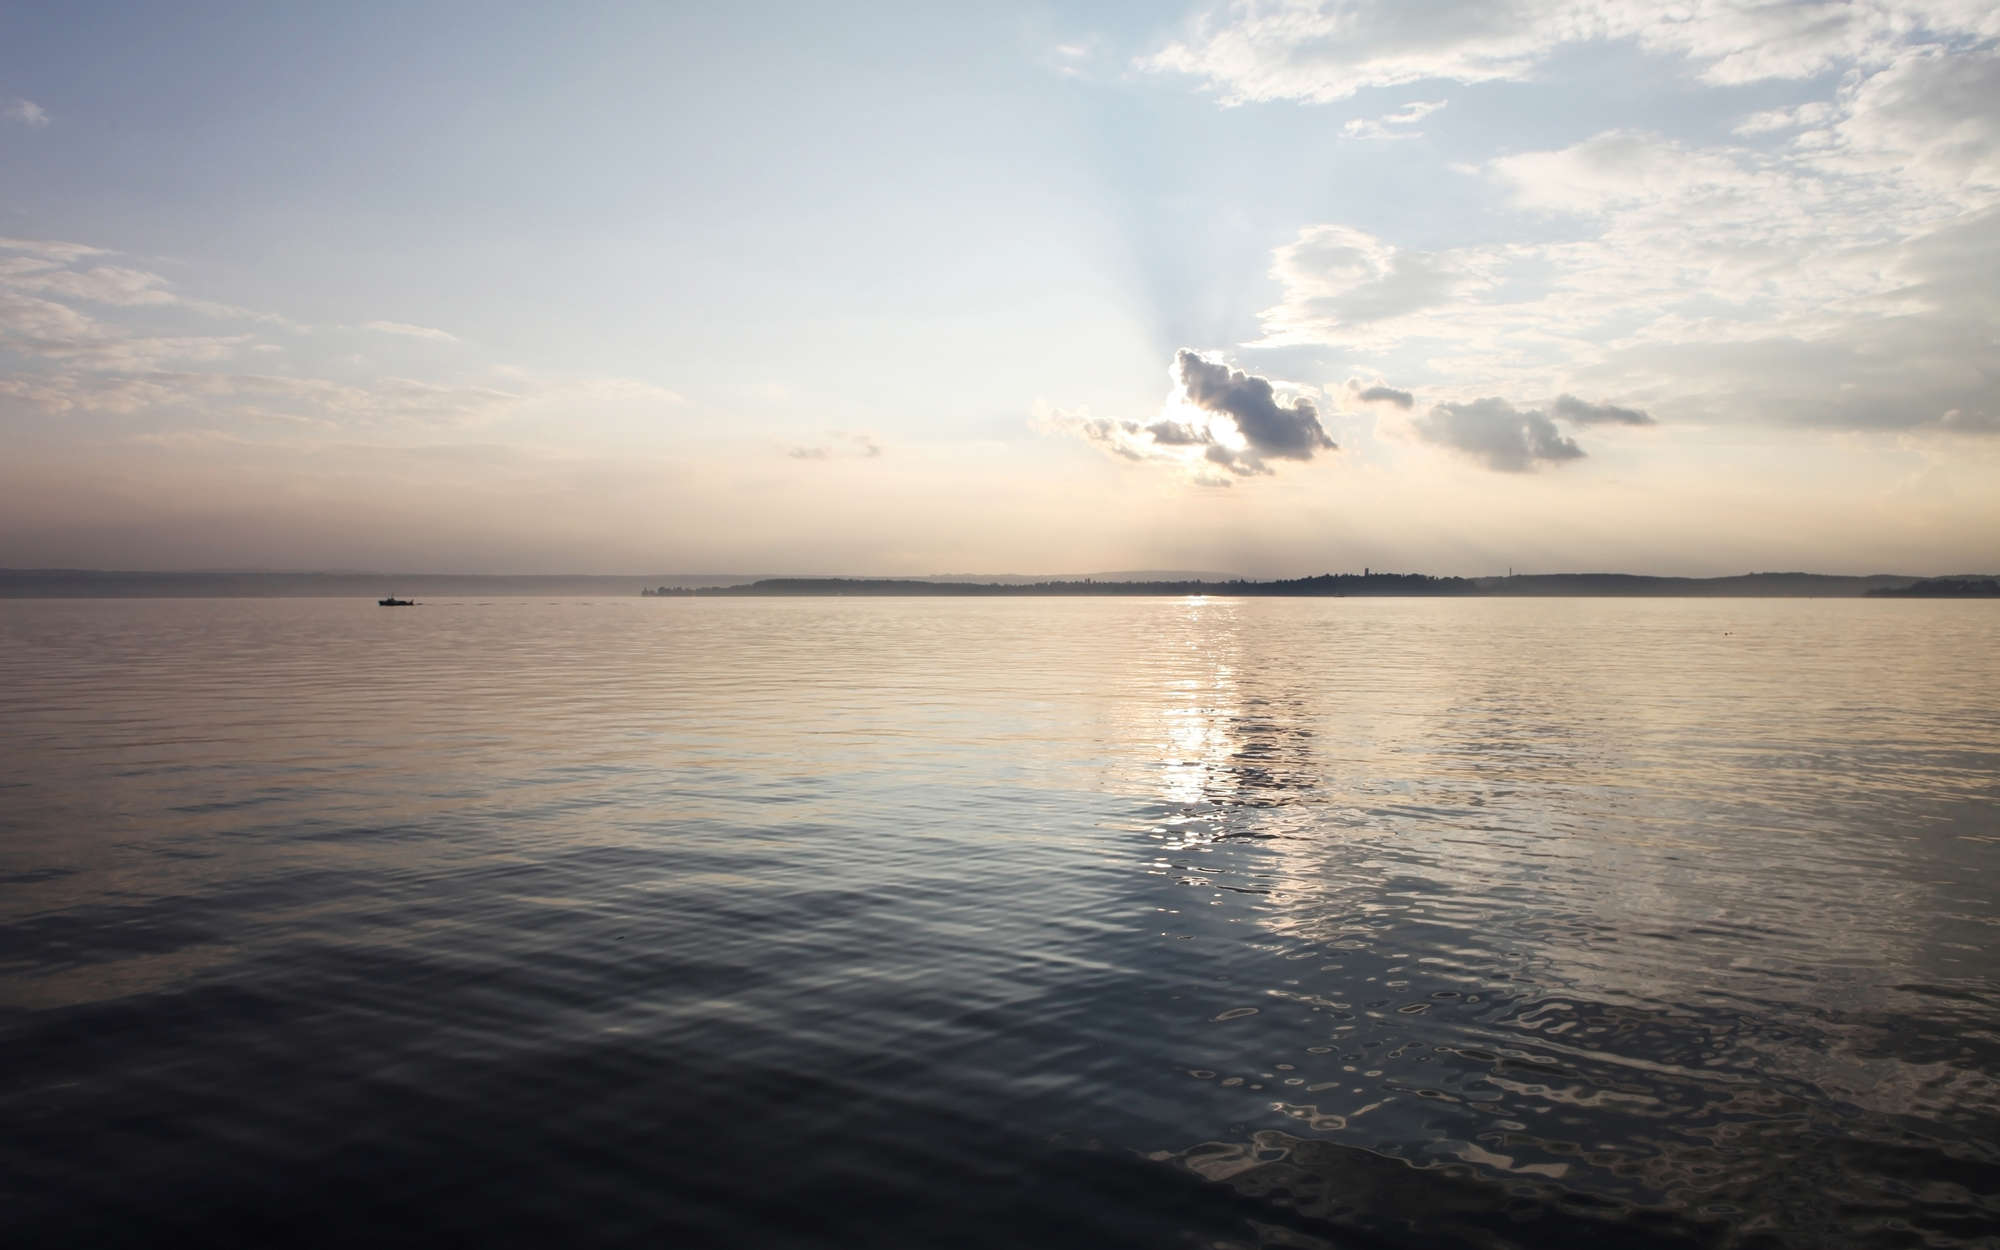             Fototapete Sonnenaufgang am See – Perlmutt Glattvlies
        